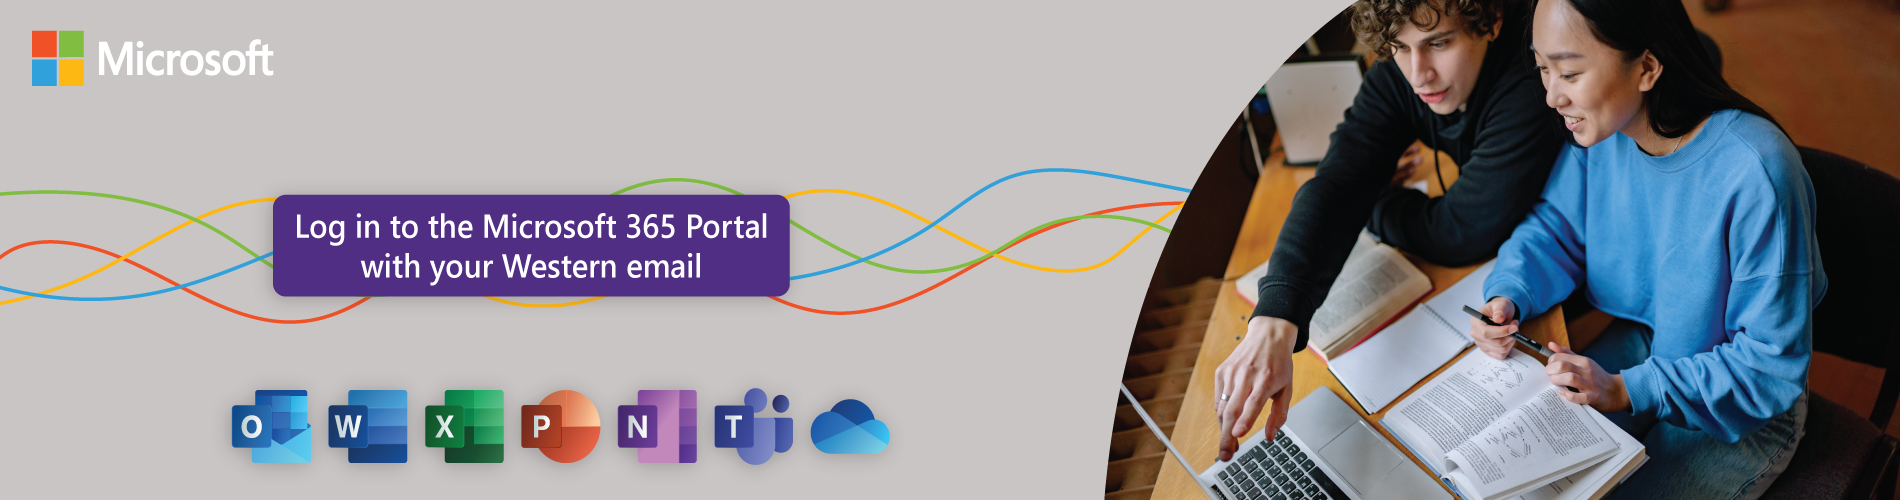 Log into the Microsoft 365 Portal